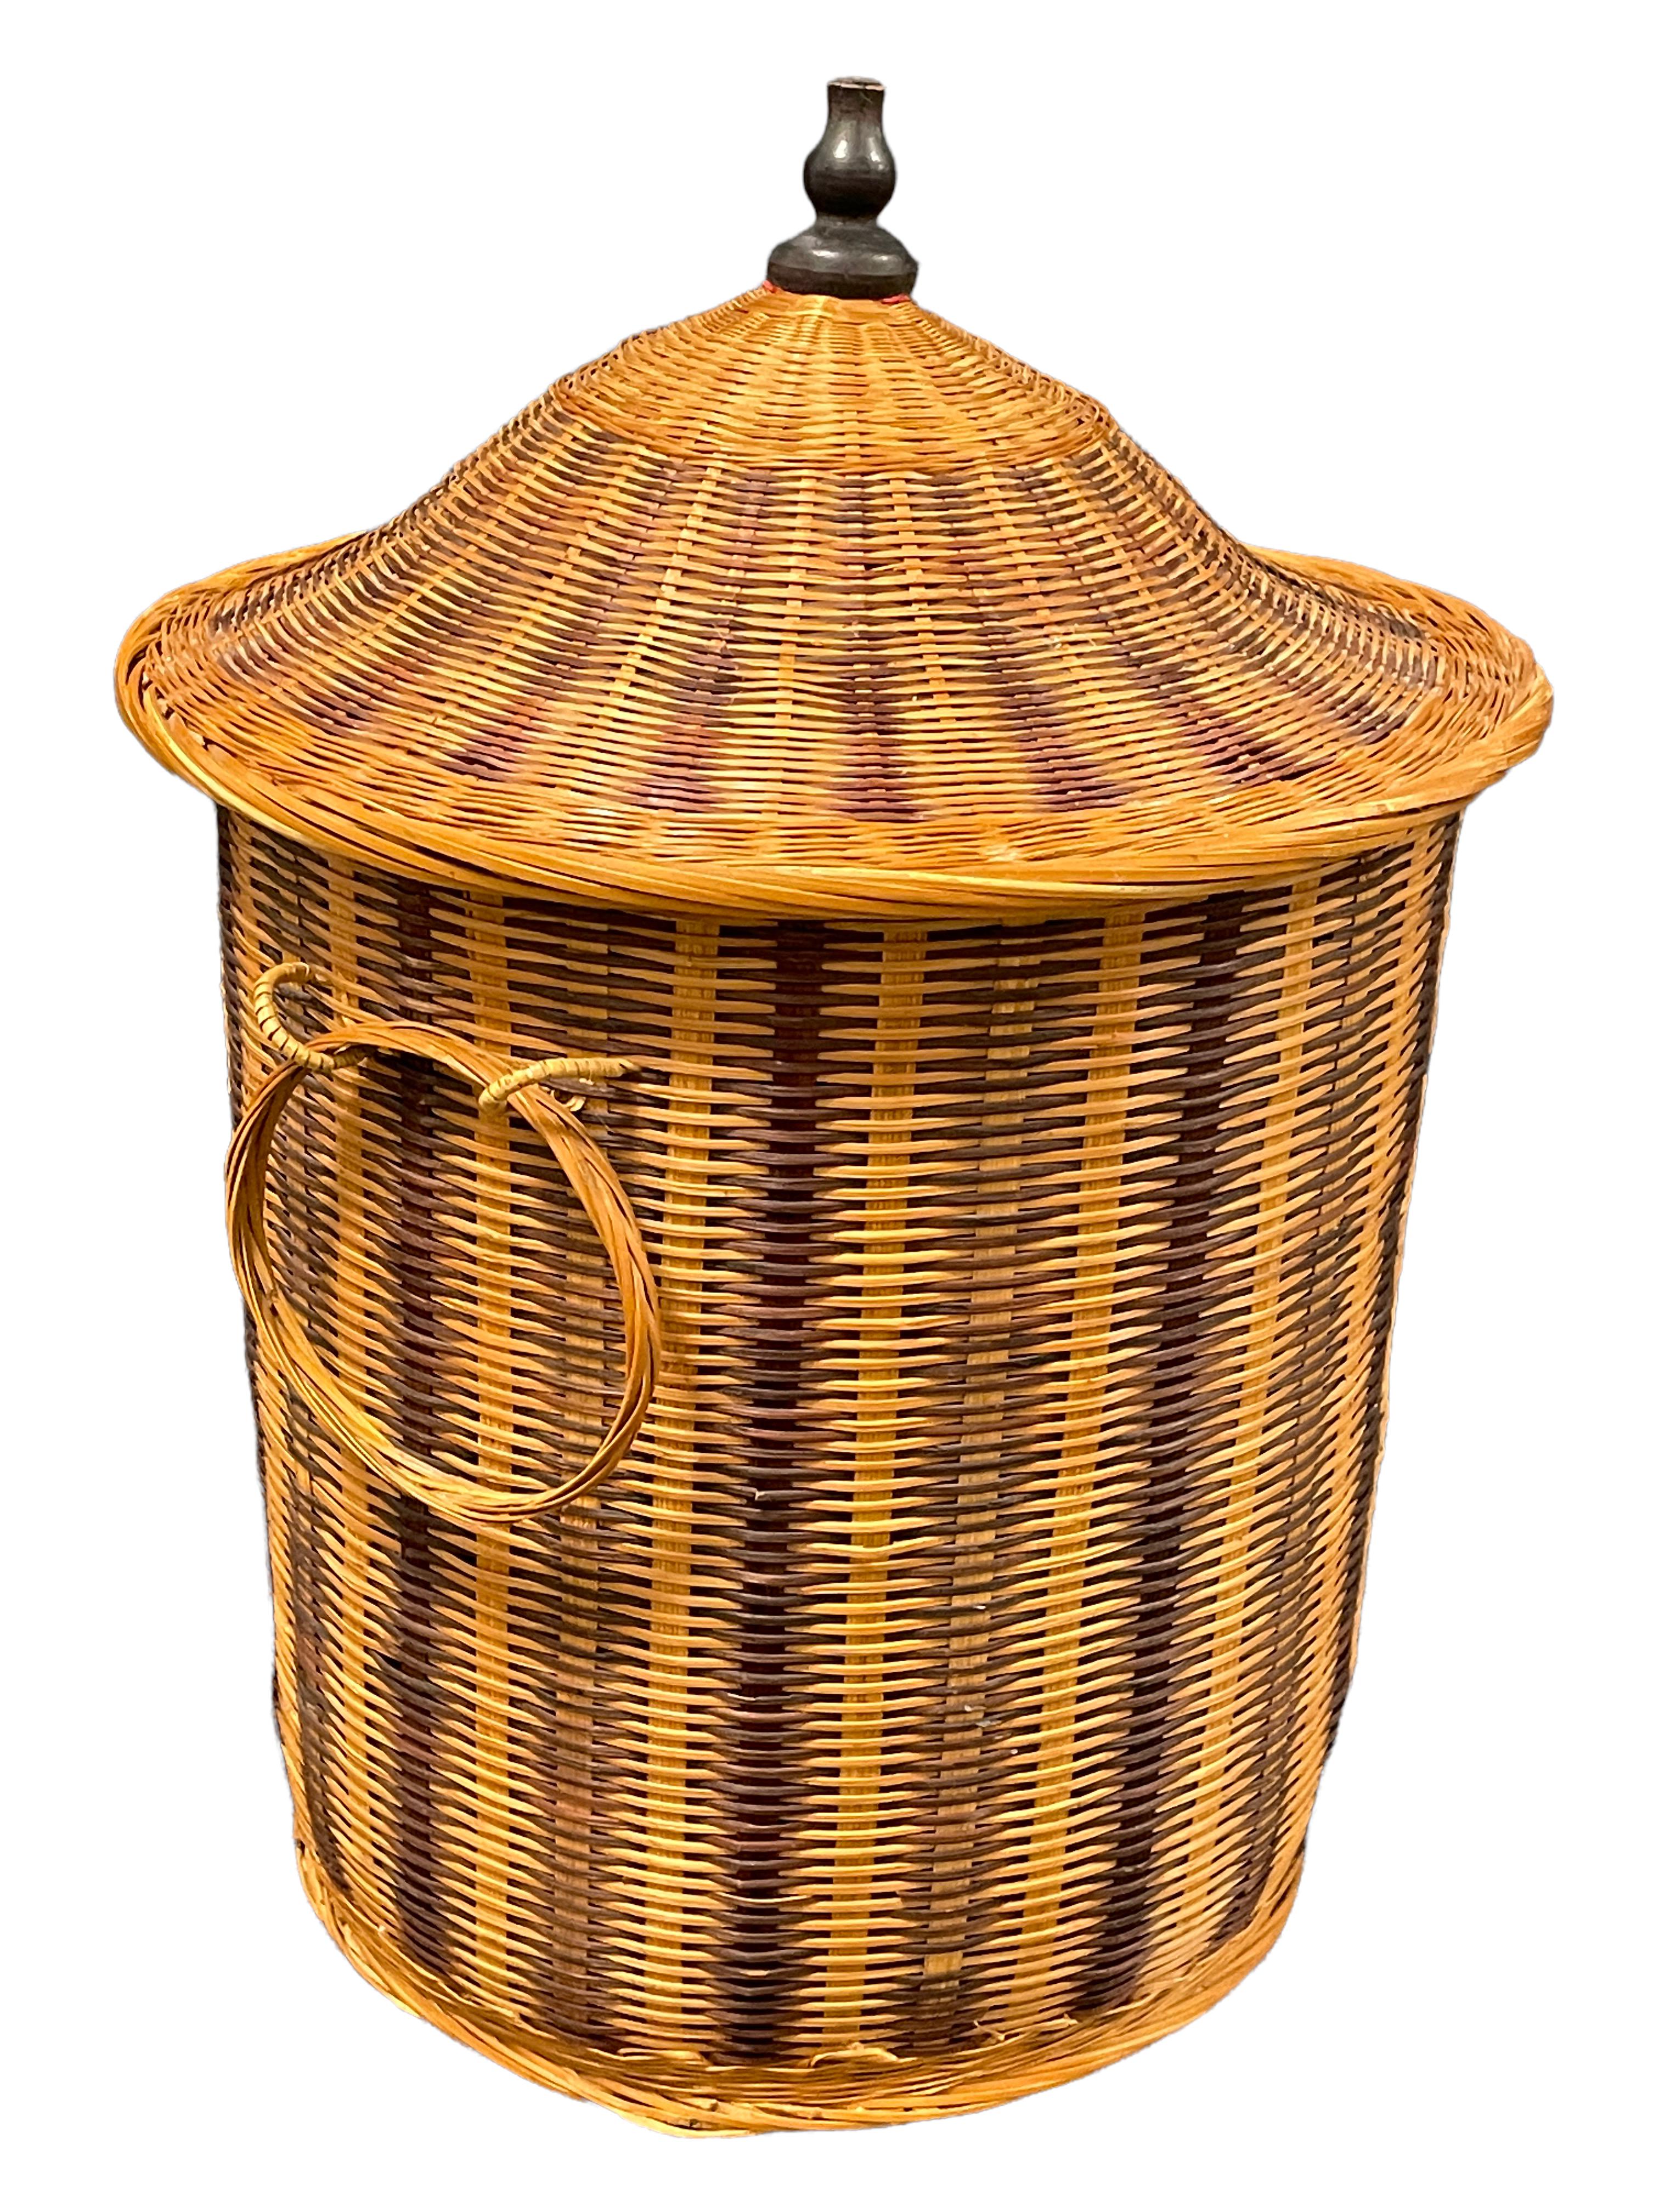 Modern Beautiful Vintage Midcentury Wicker Small Laundry Basket Hamper, 1980s, German